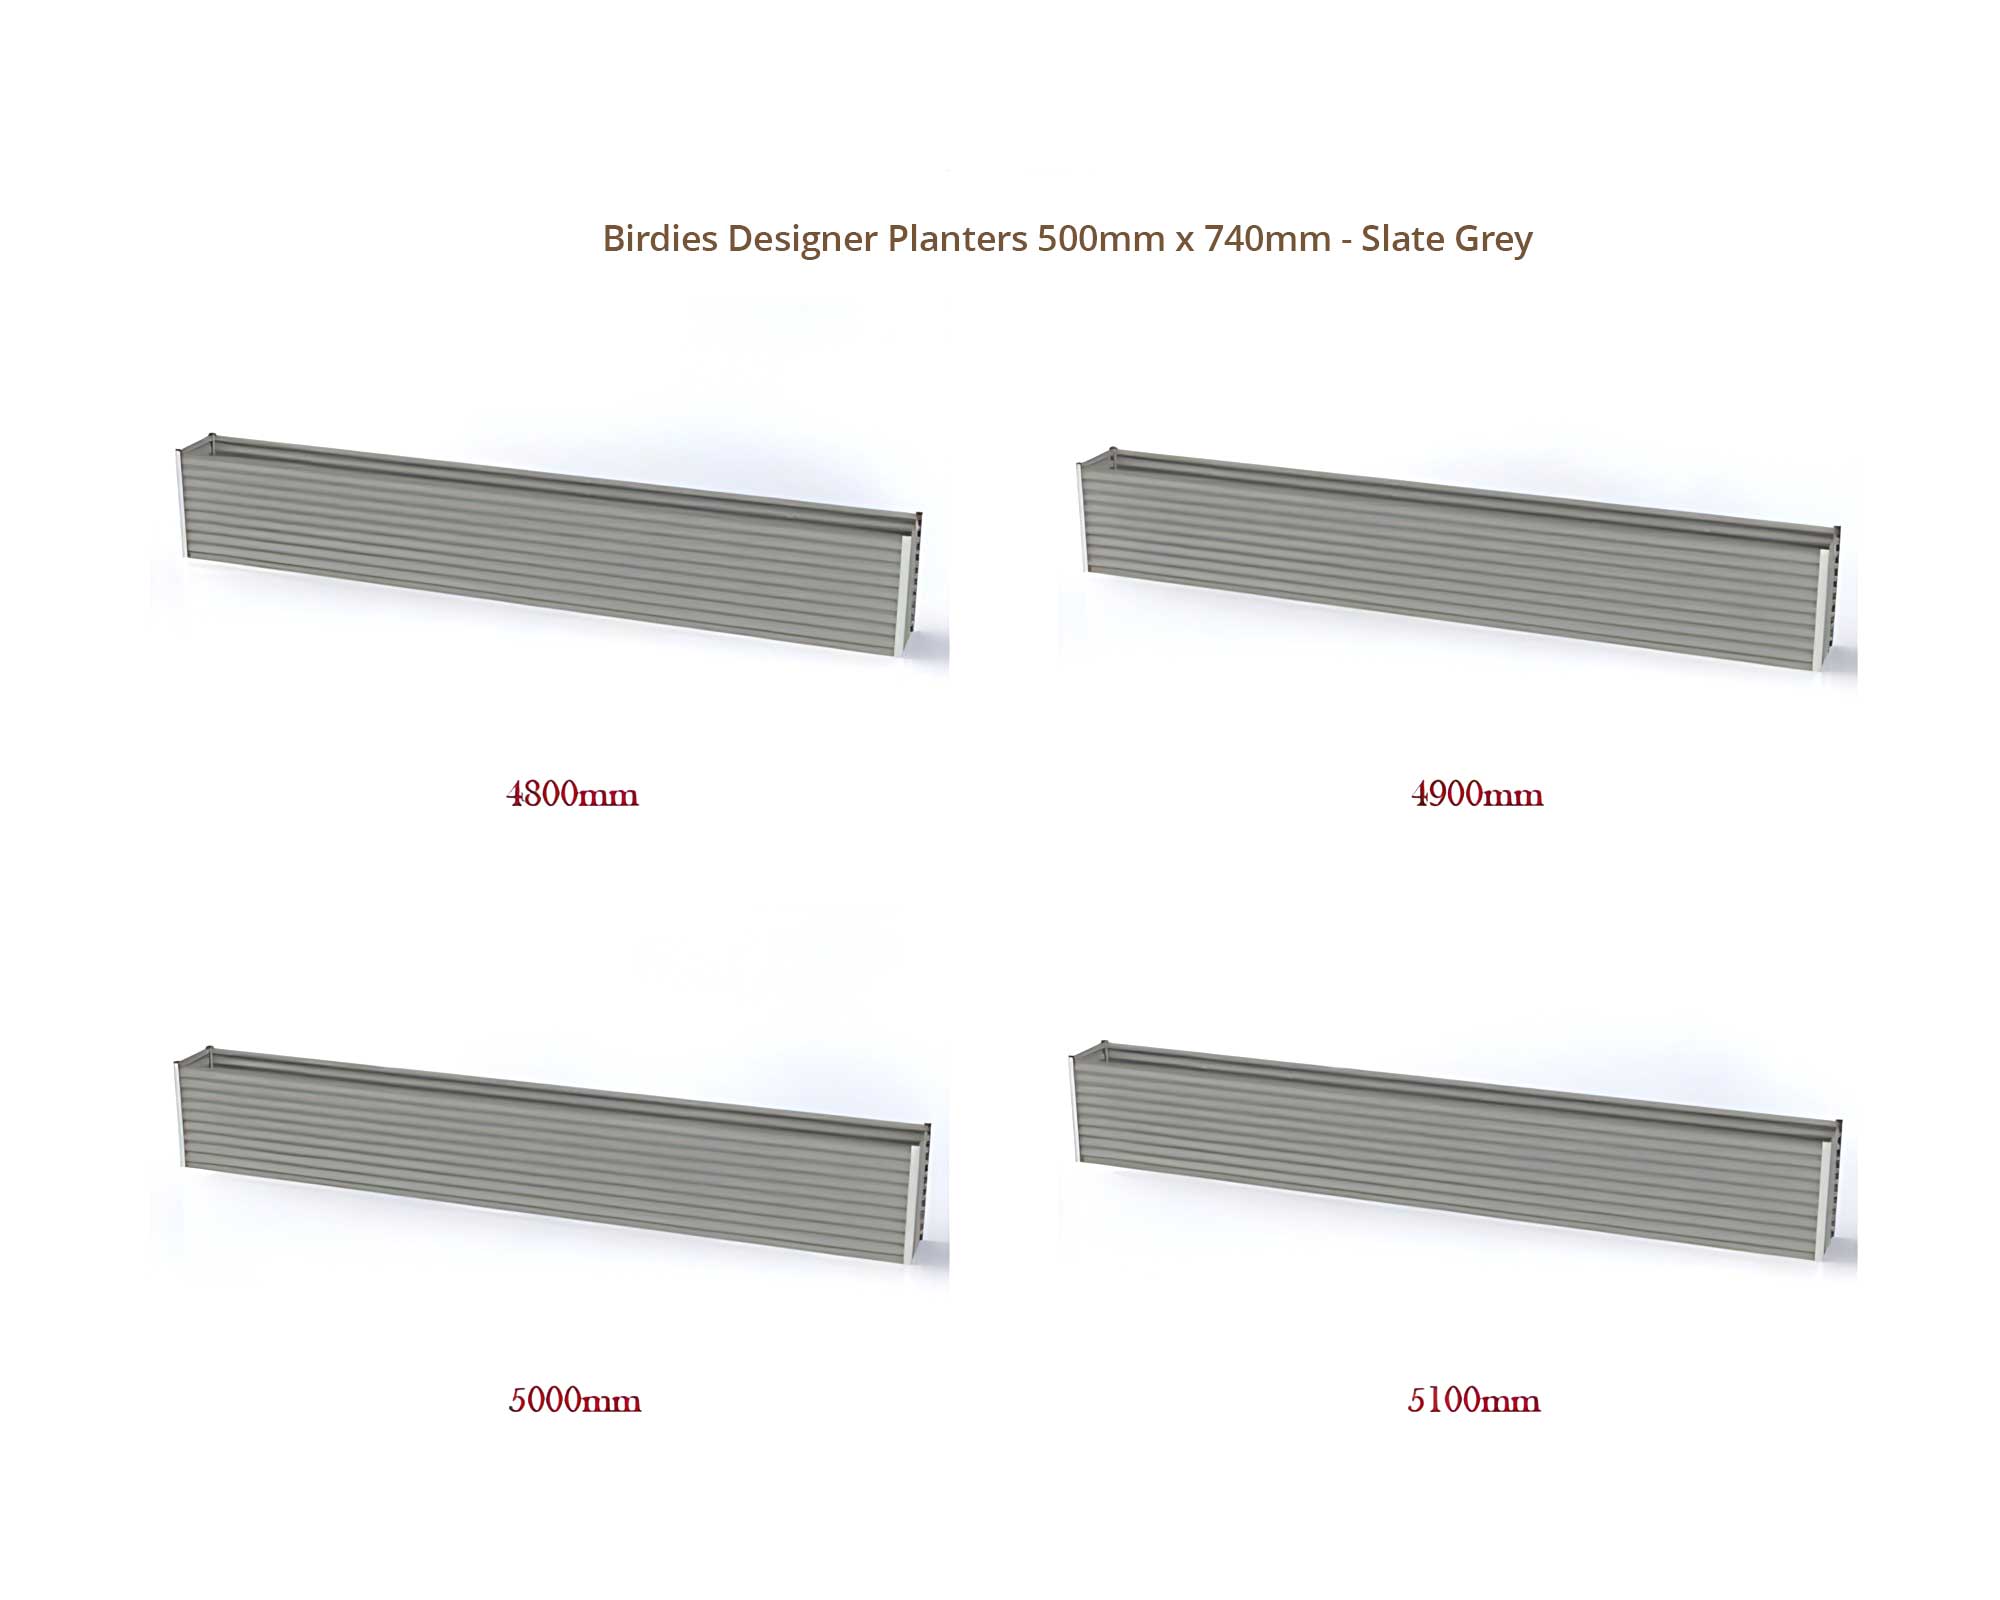 Birdies Designer Planters - 500mm Wide x 740mm High - Slate Grey